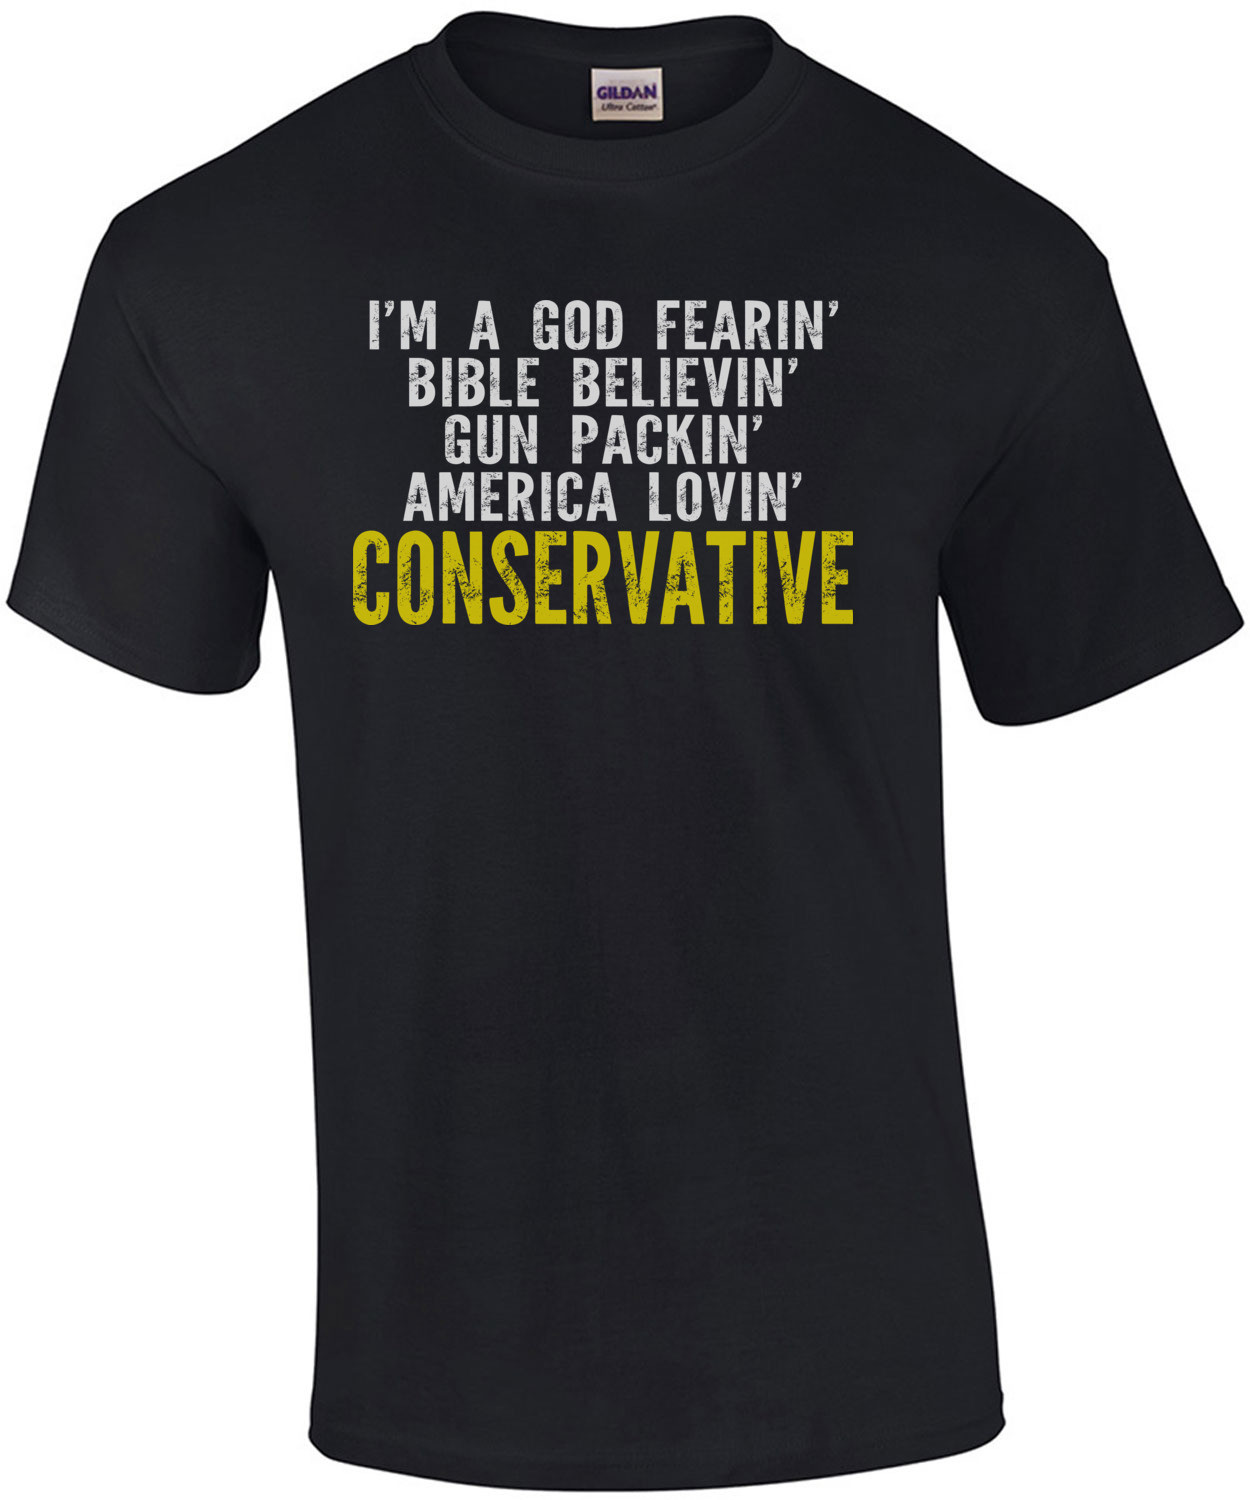 I'm a god fearin' bible believin' gun packin' america lovin' conservative t-shirt